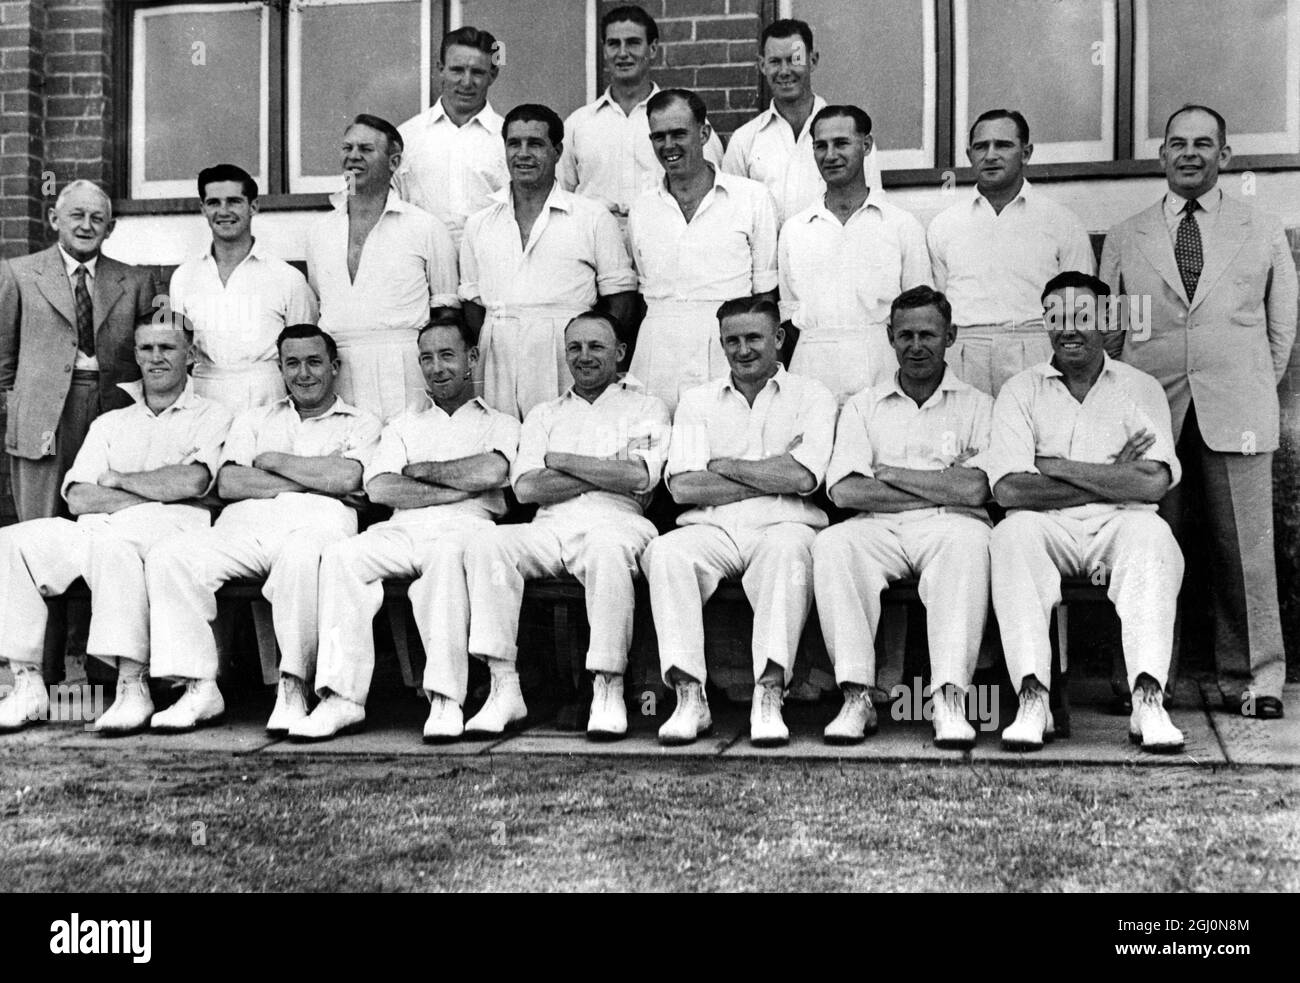 Das australische Test-Cricket-Team von 1948 hintere Reihe: Ray Lindwall ; Keith Miller ; W. Brown mittlere Reihe: W. Ferguson (Torschütze) N. Harvey ; D. Ring ; E. Toshack ; W. Johnston ; R. Saggers ; S. Barnes ; G. Johnson (Manager) vordere Reihe: S. Loxton ; R. Hamence ; Lindsay Hassett ; Don Bradman (Kapitän) ; C. McCool ; A. Morris ; I. Johnson. (D. Tallon war abwesend) 29. März 1948 ©Topham - TopFoto Stockfoto